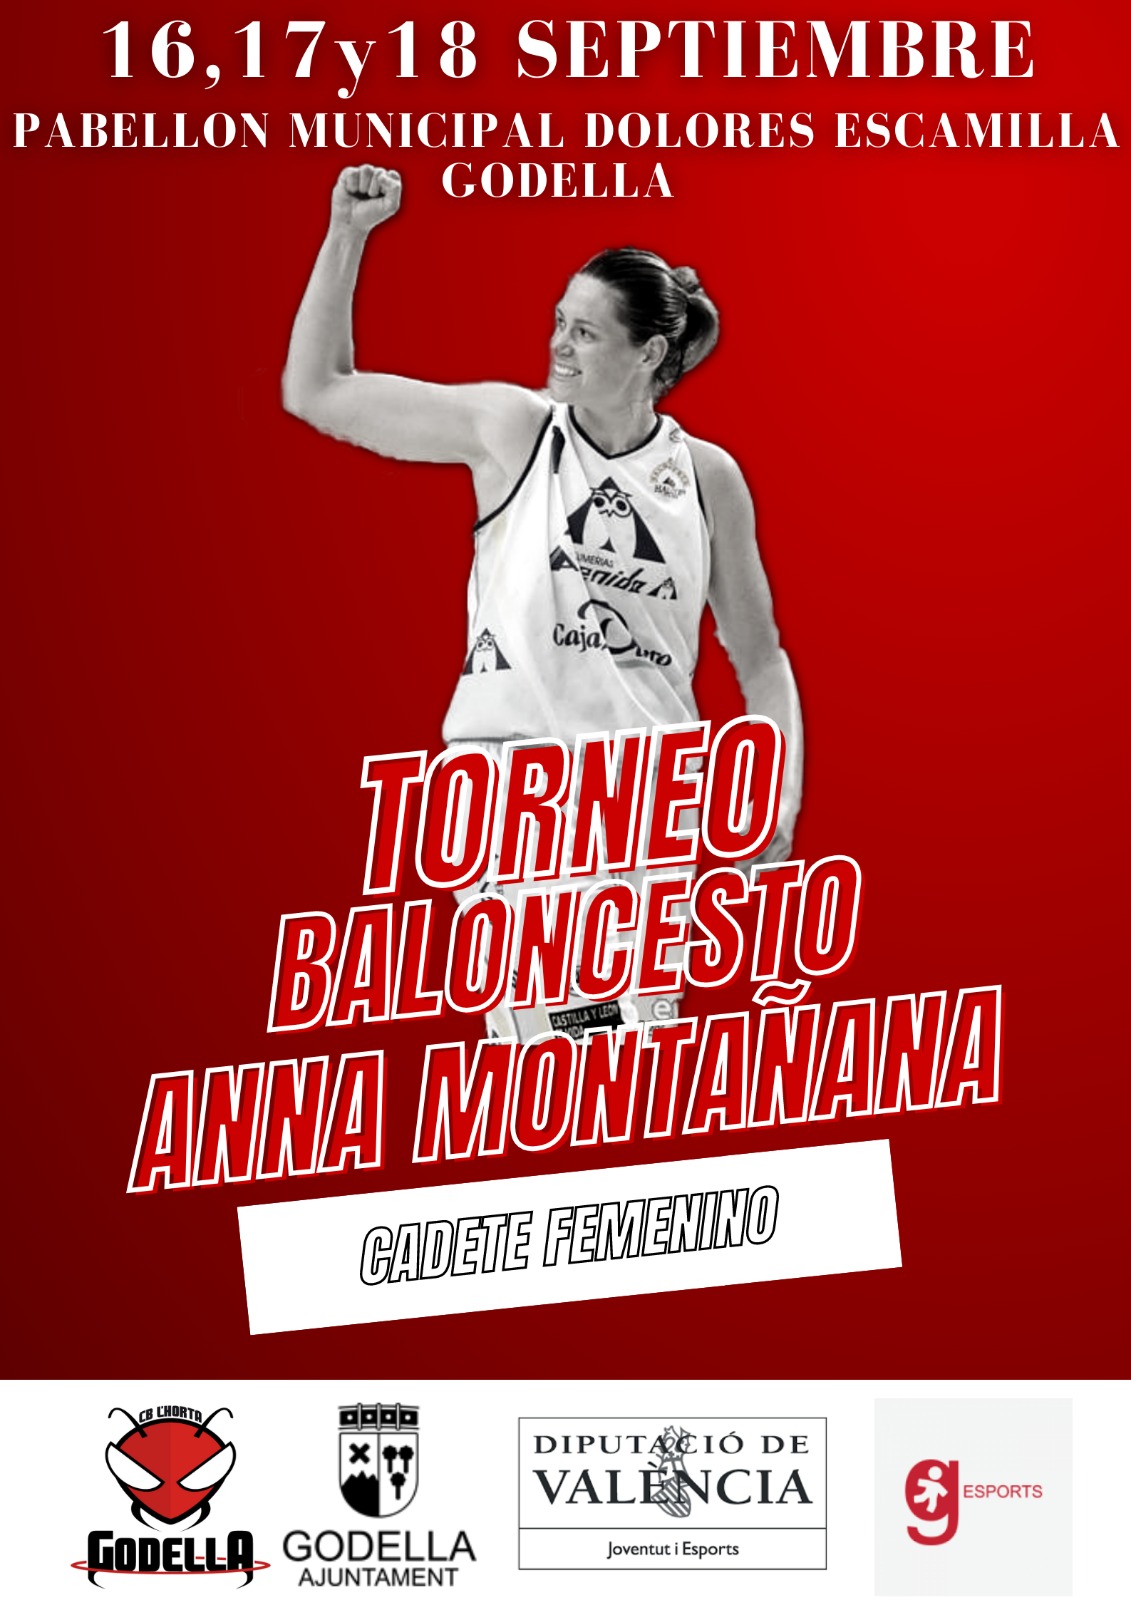 Torneo de Baloncesto Anna Montañana